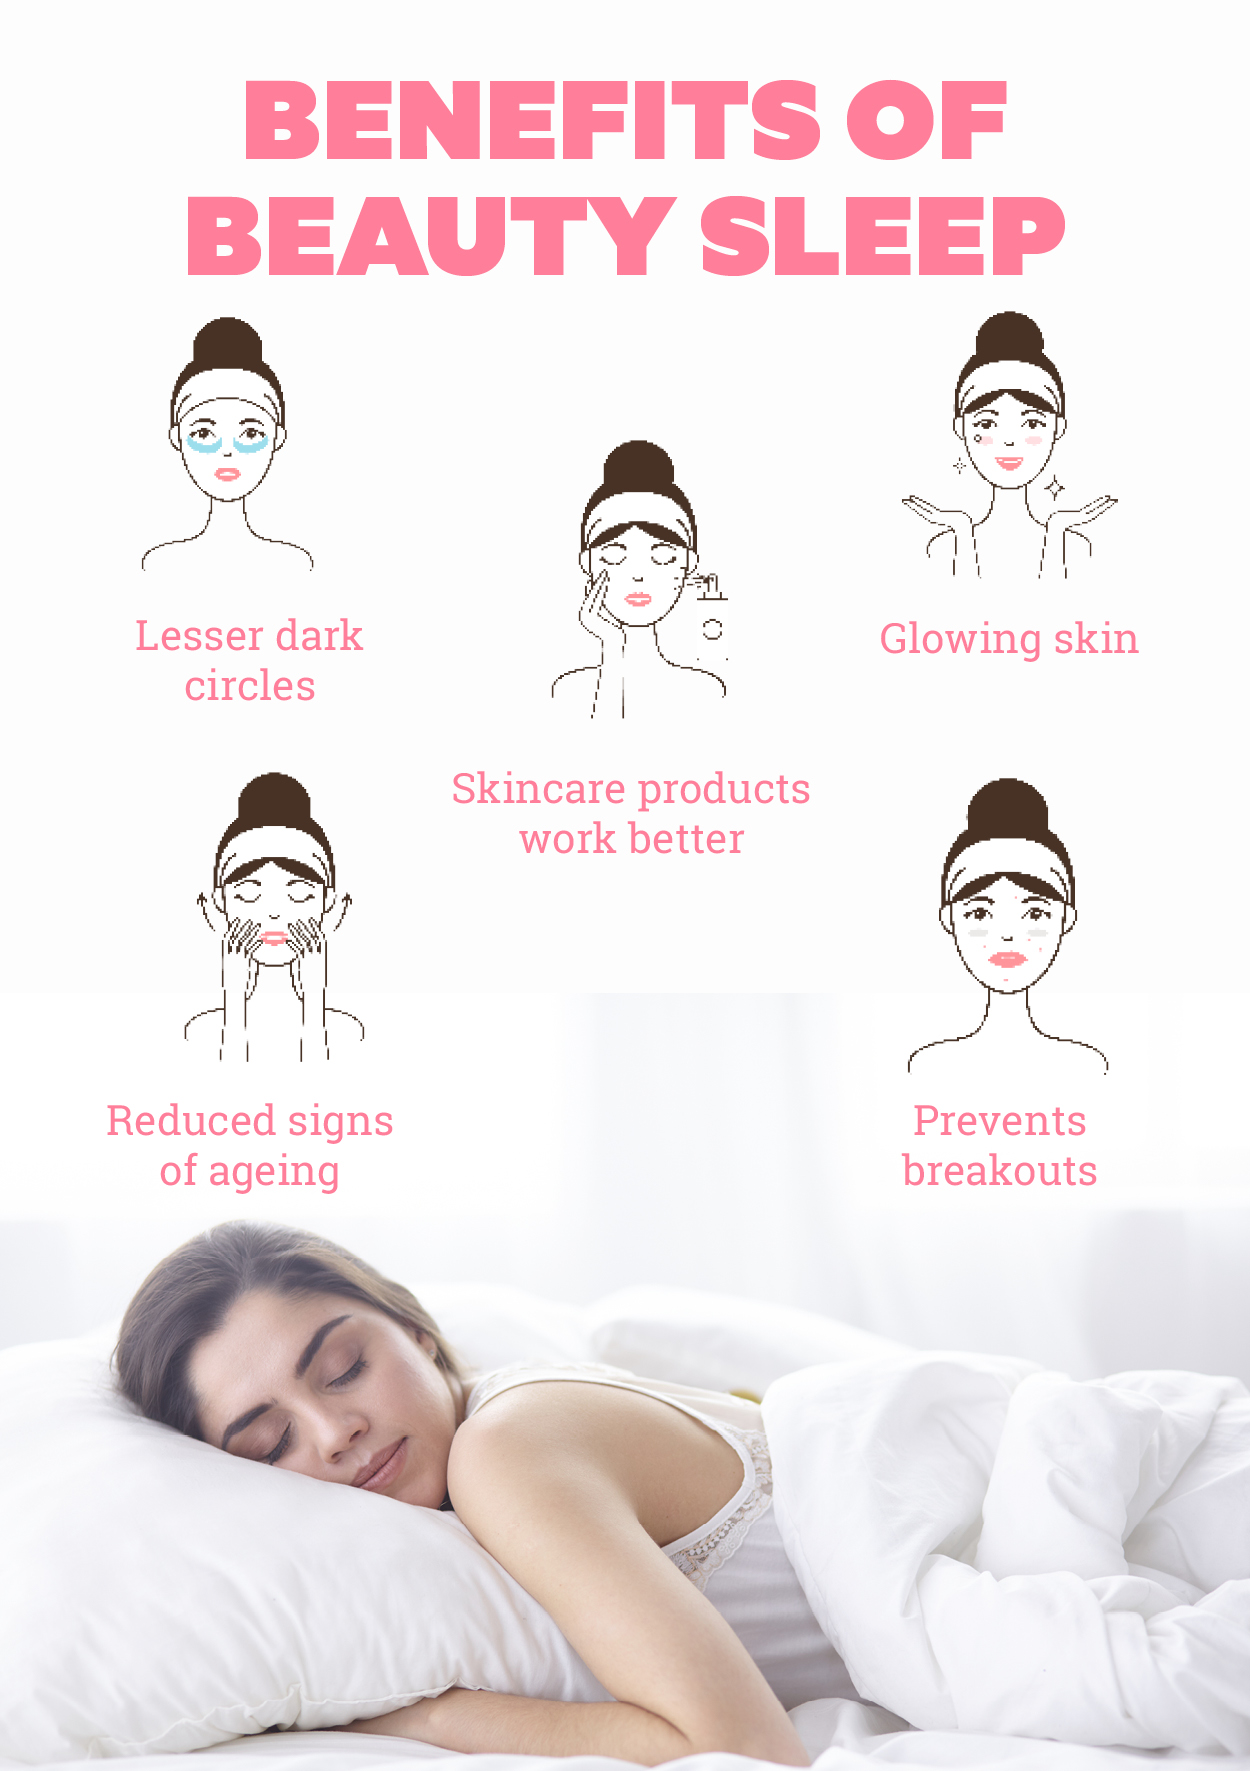 Here's why beauty sleep is vital to achieve healthy, glowing skin